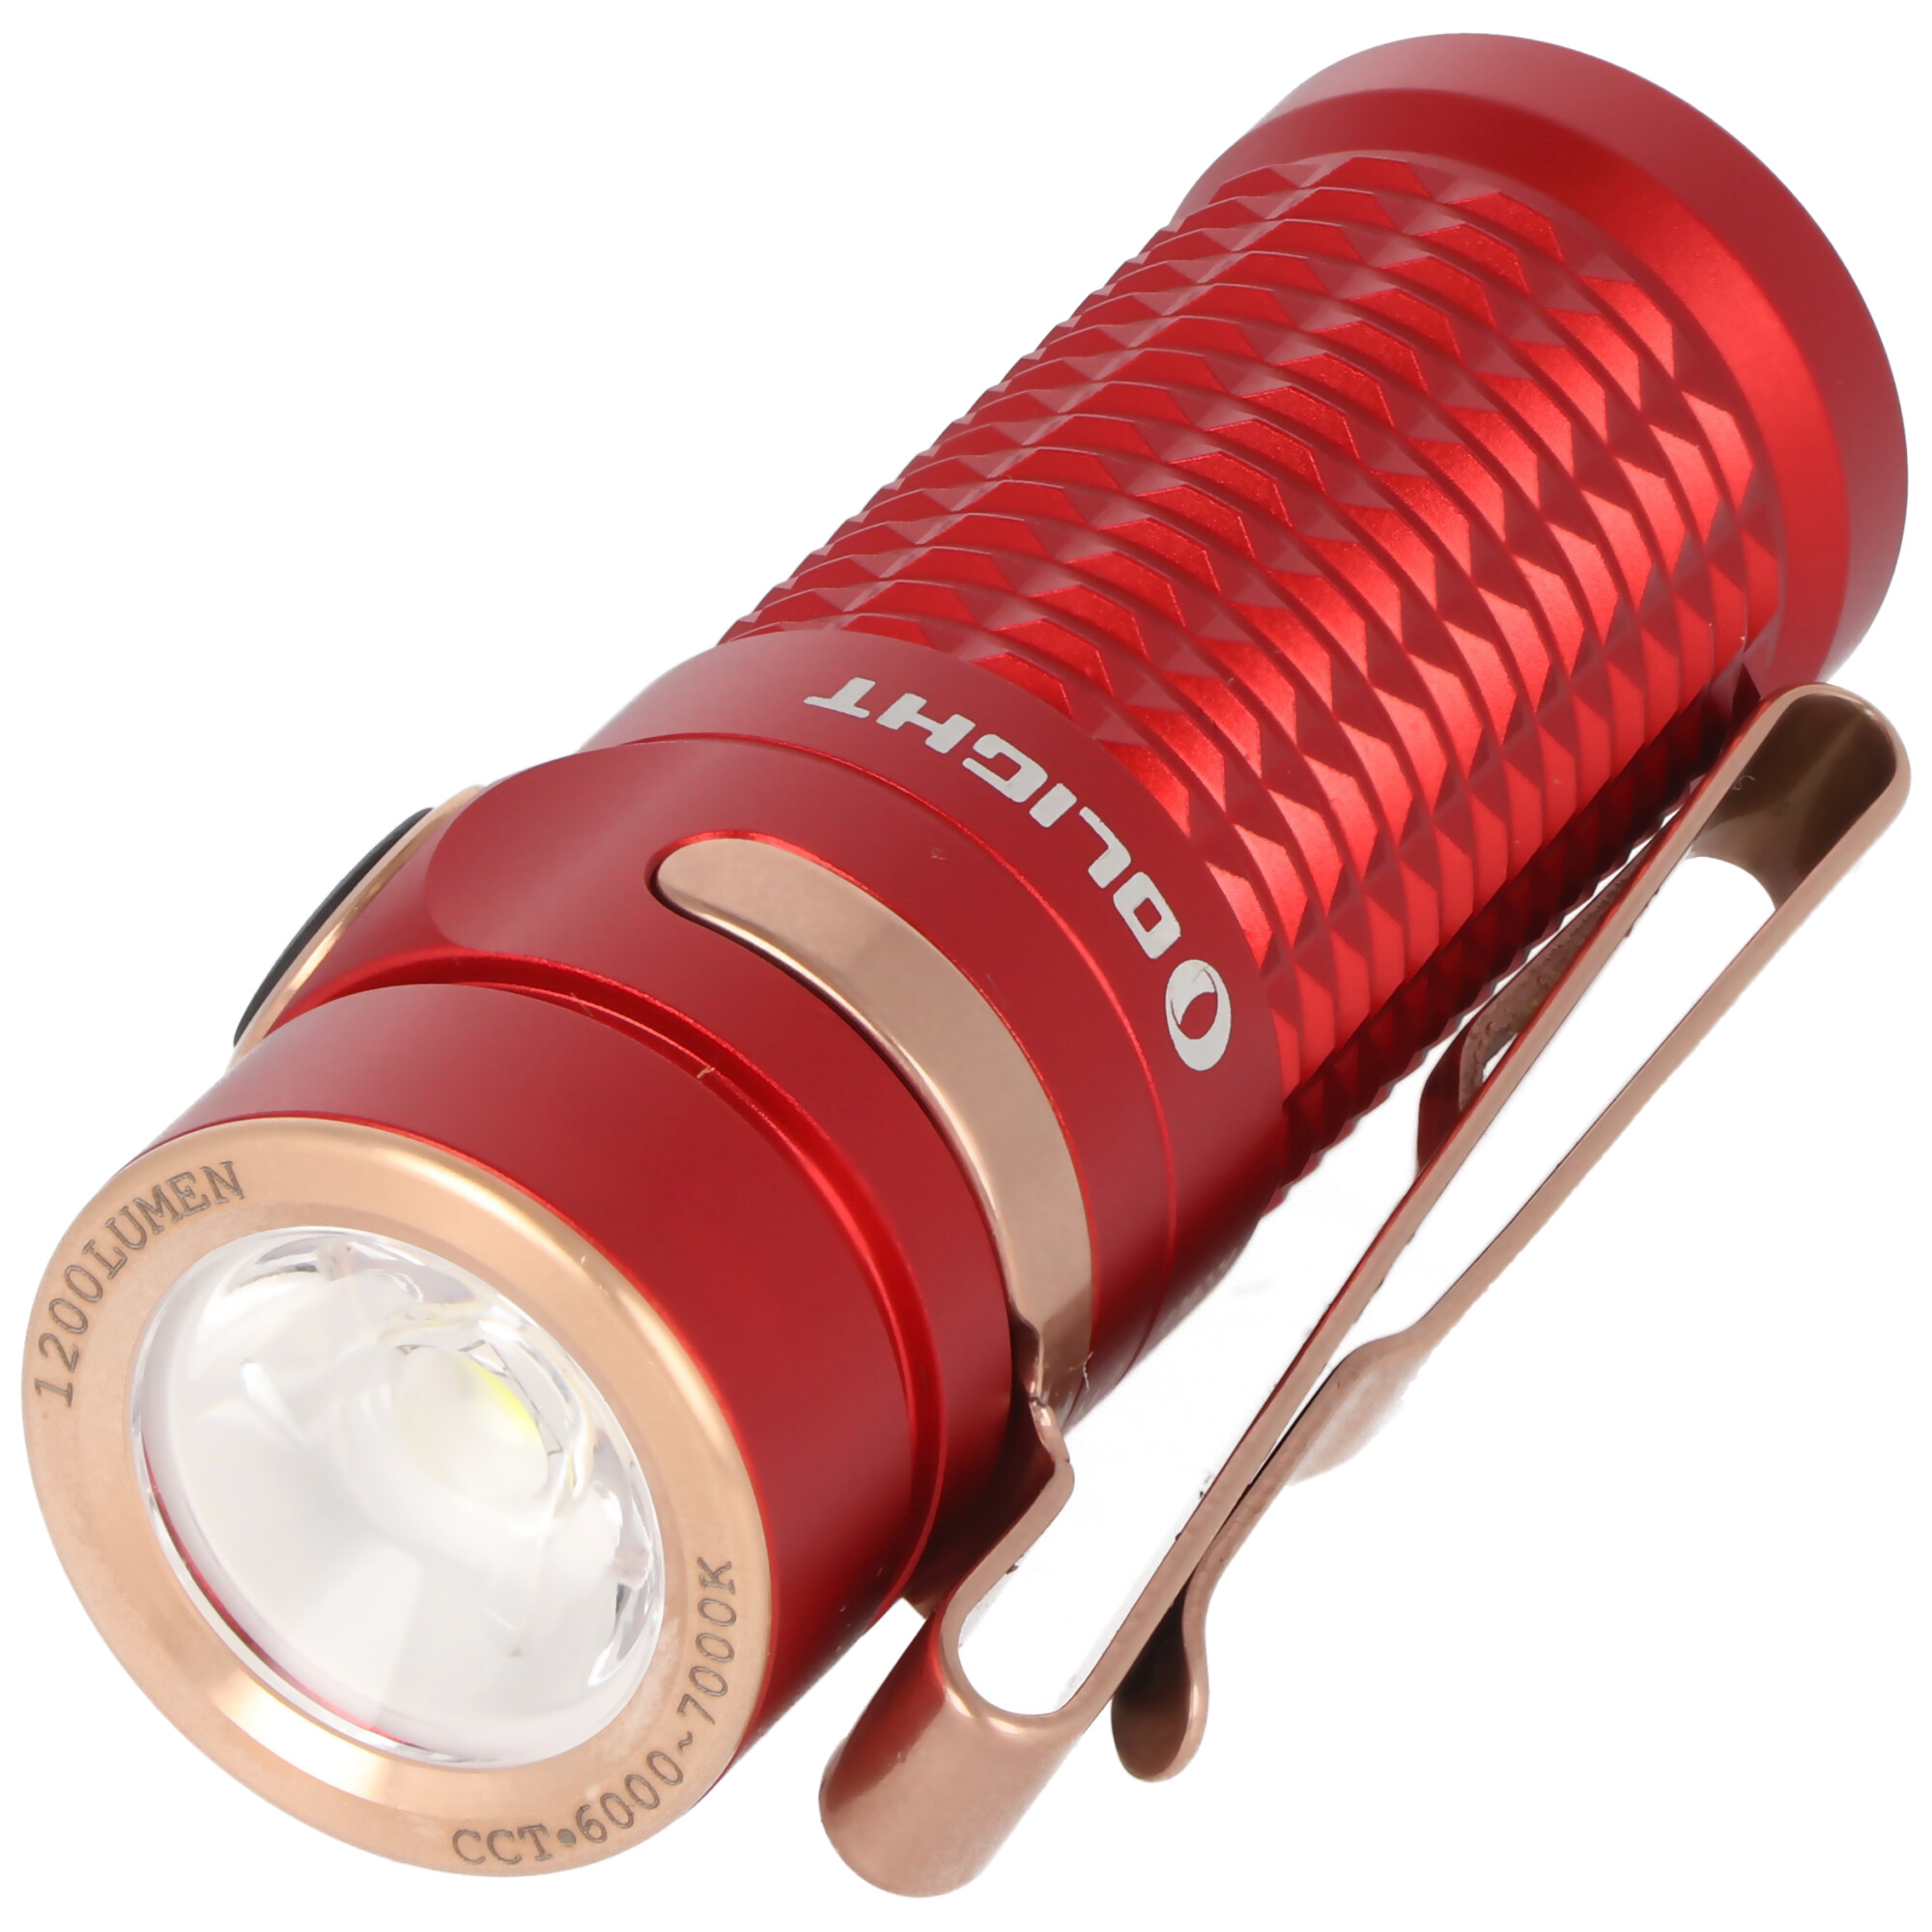 Olight Baton 3 Premium Edition, LED-Taschenlampe Baton 3 mit Ladecase rot, drahtloses Laden, inklusive Akku und Baton 3 Ladecase rot